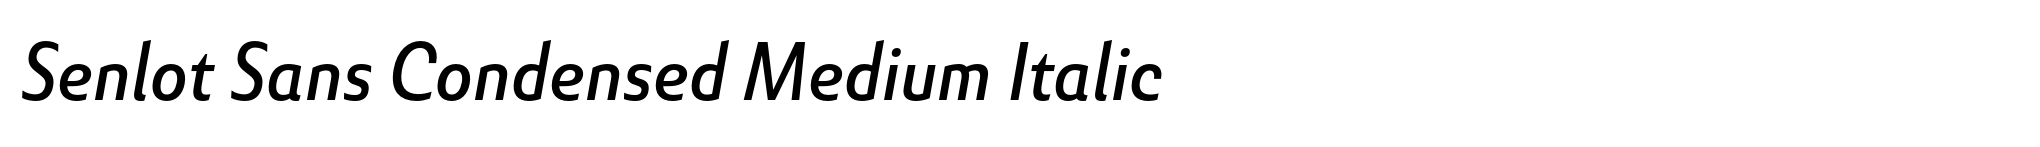 Senlot Sans Condensed Medium Italic image